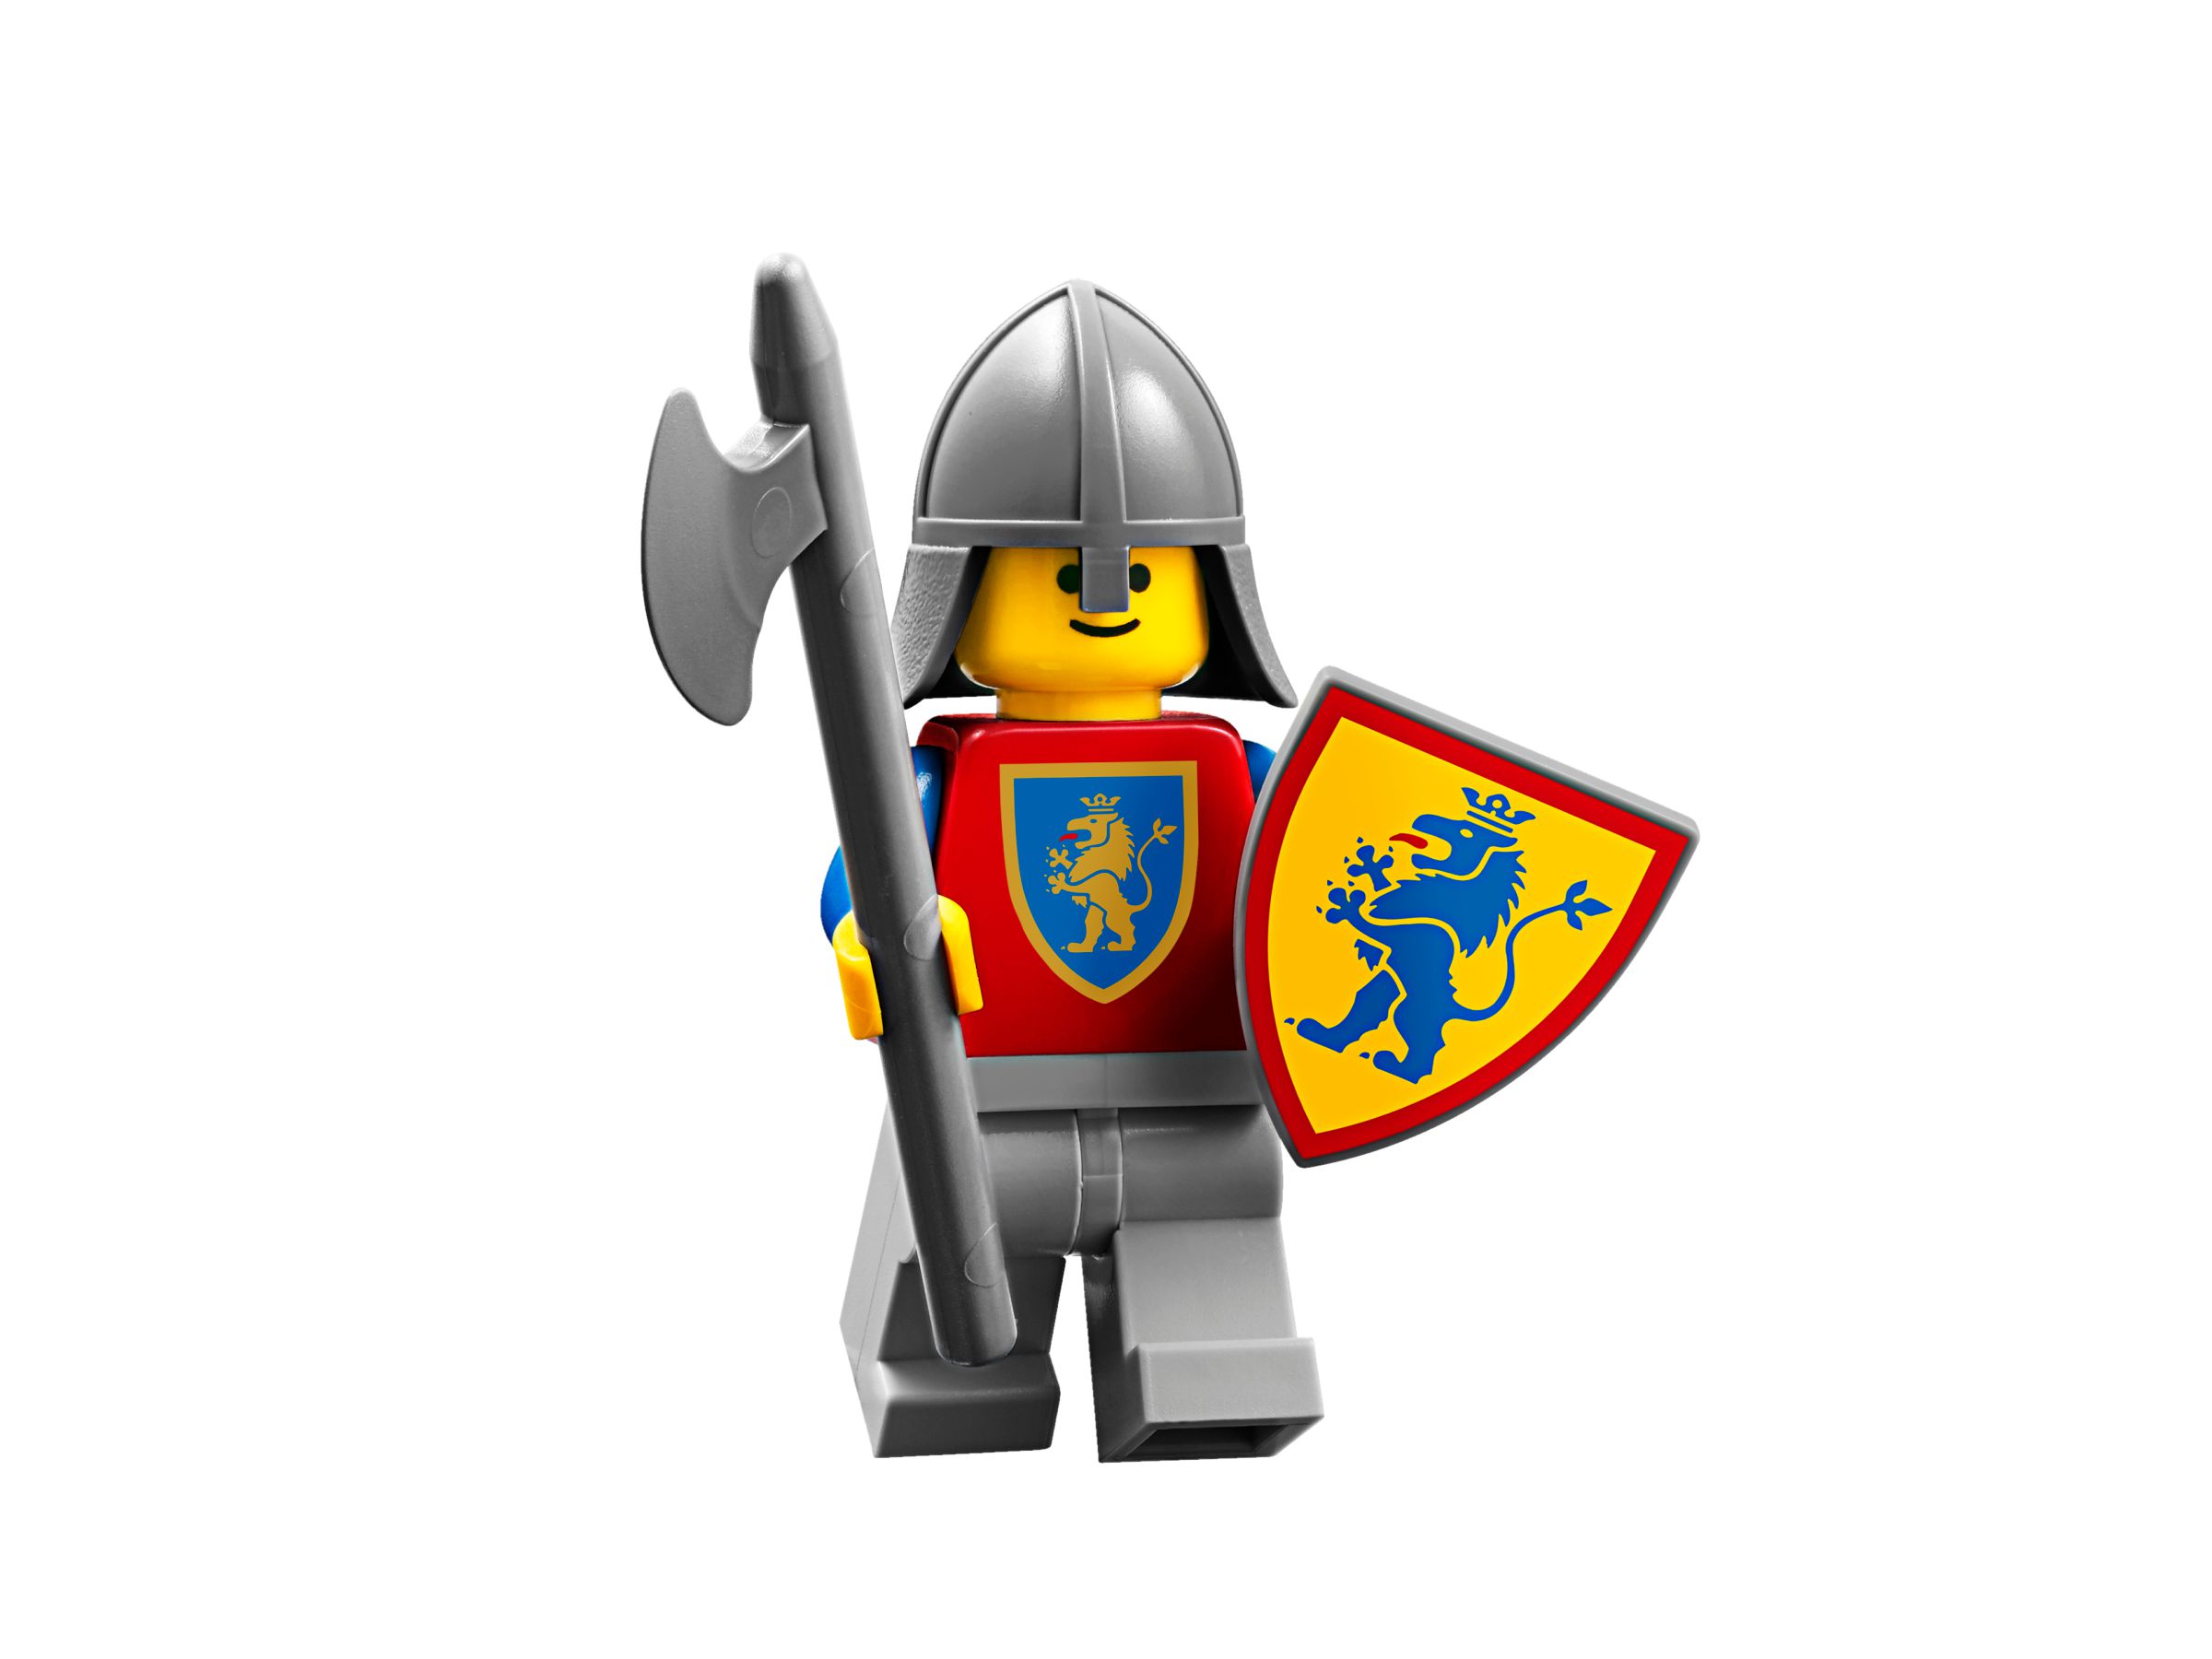 LEGO Miscellaneous 5004419 Knights Retro-Set LEGO_5004419_alt3.jpg